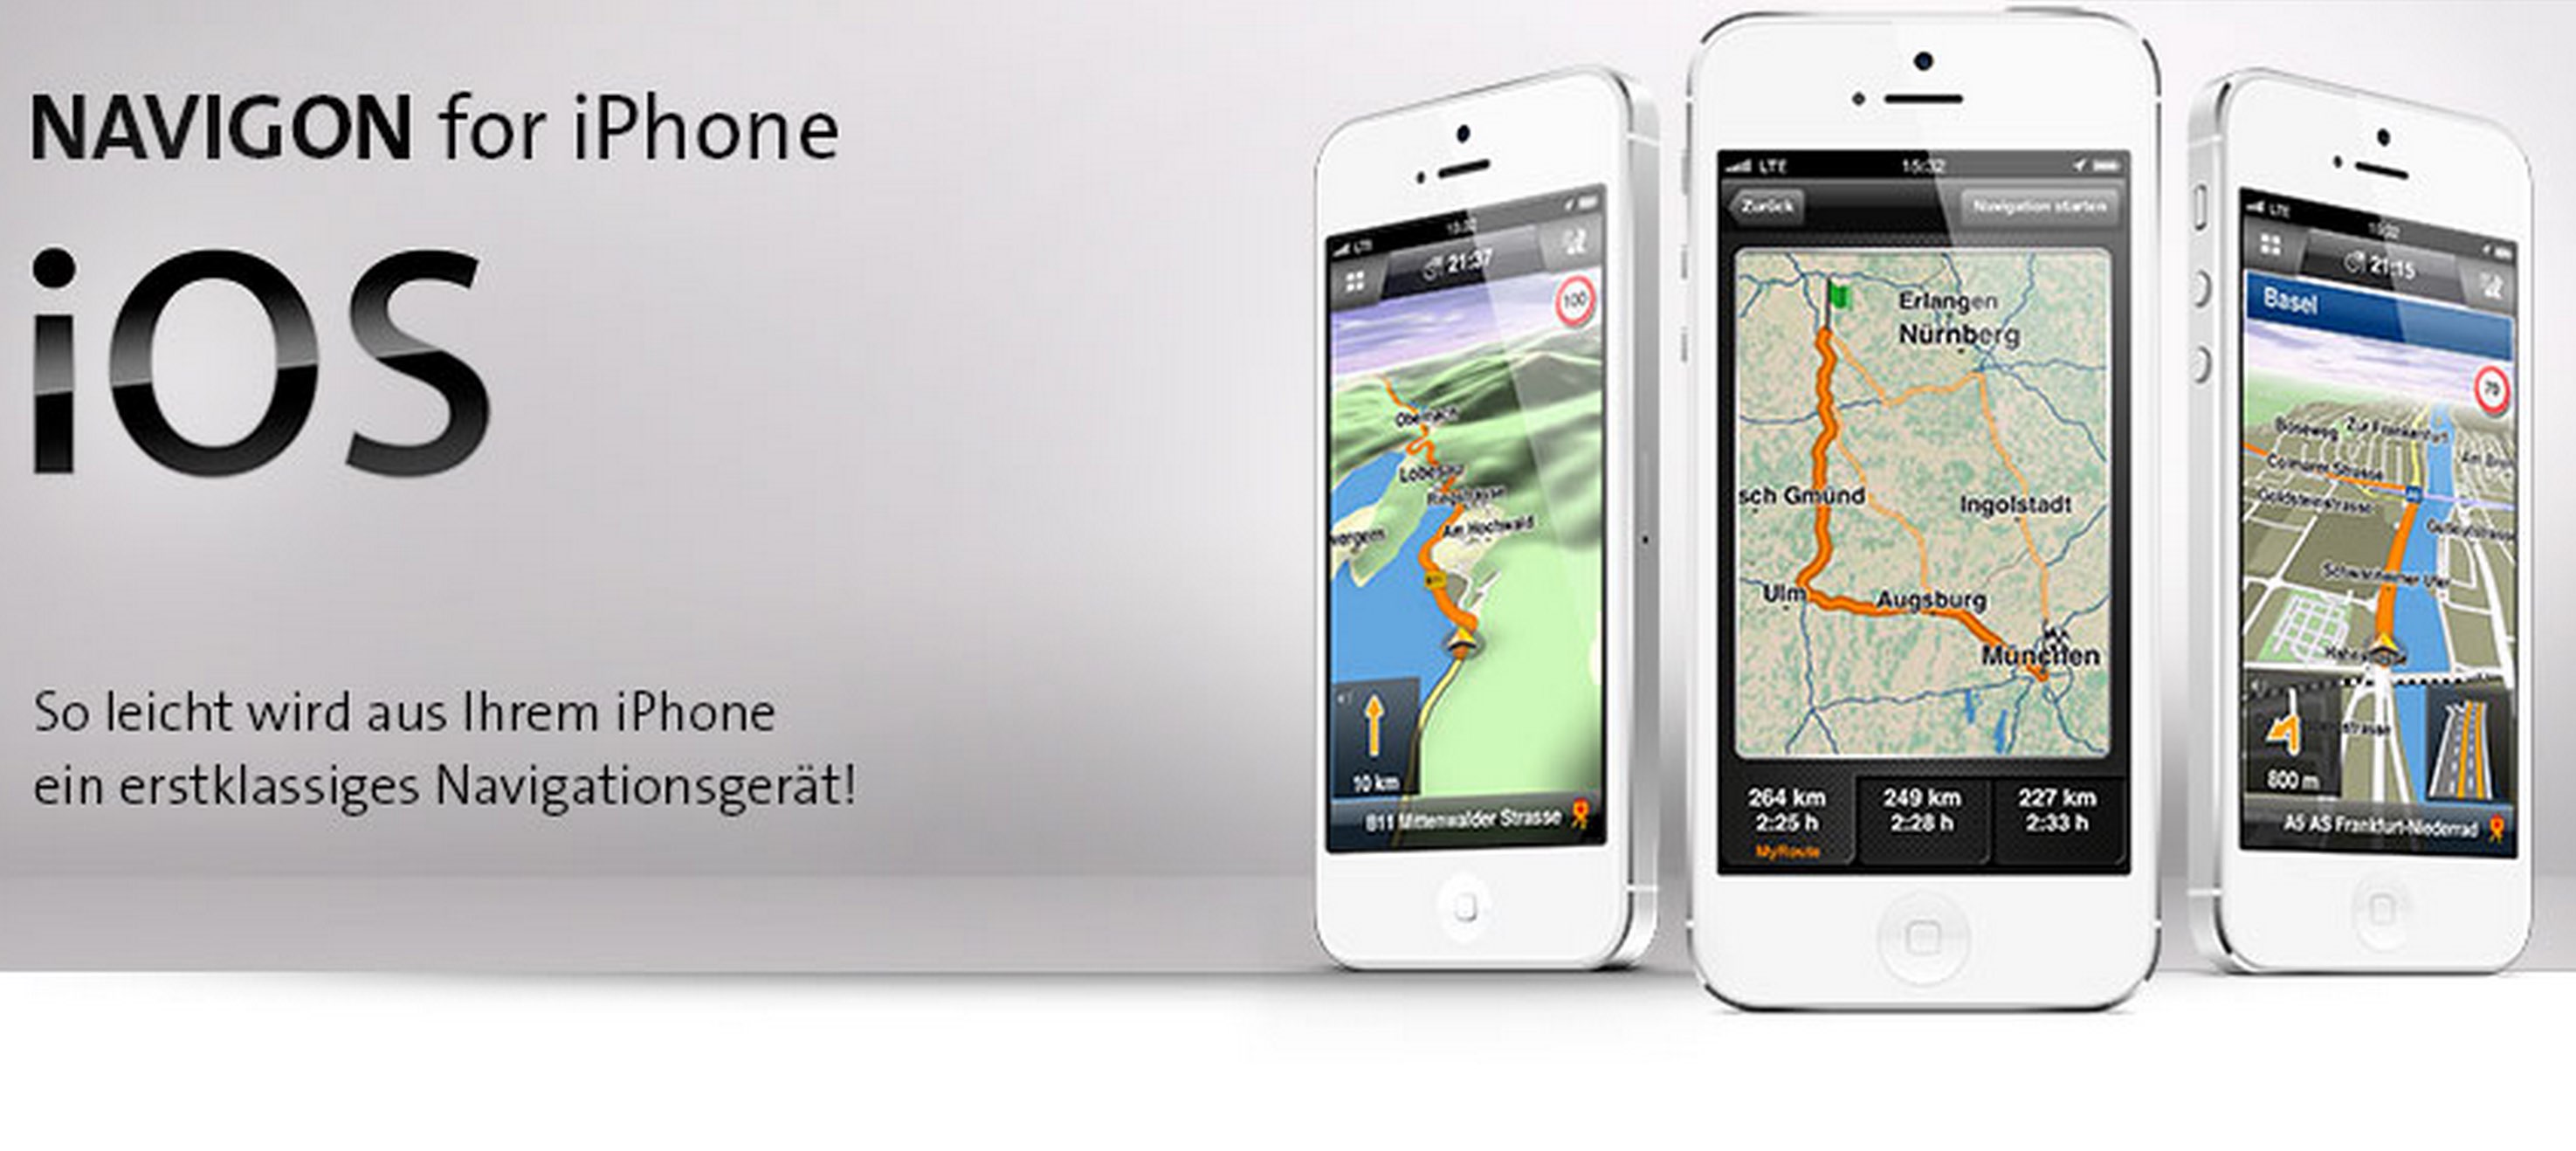 Navigon für iPhone 6 & iPhone 6 Plus angepasst 1